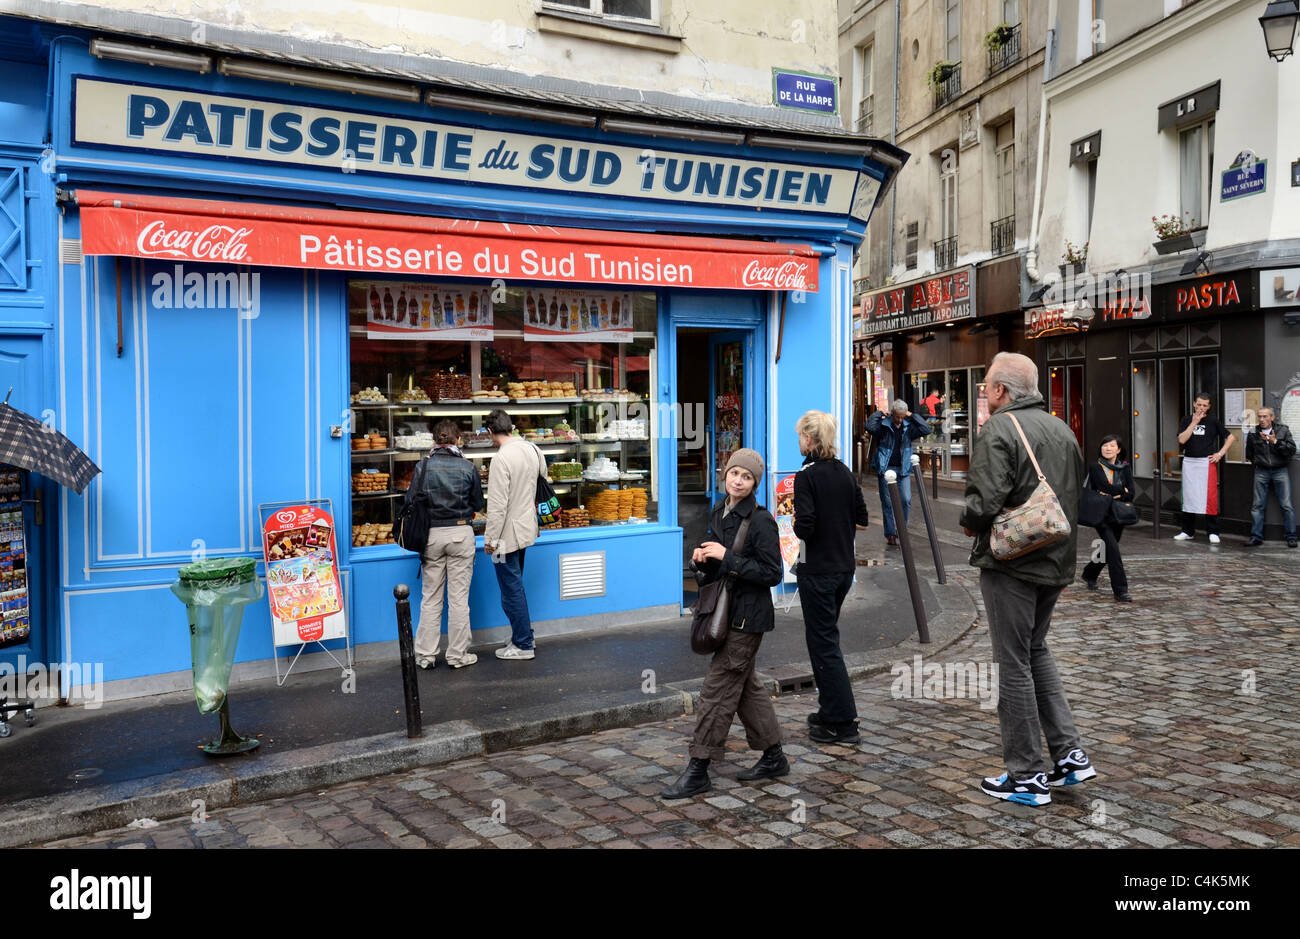 Patisserie Du Sud Tunisien On The Rue De La Harpe In The Latin Quarter Of Paris France Stock Photo Alamy